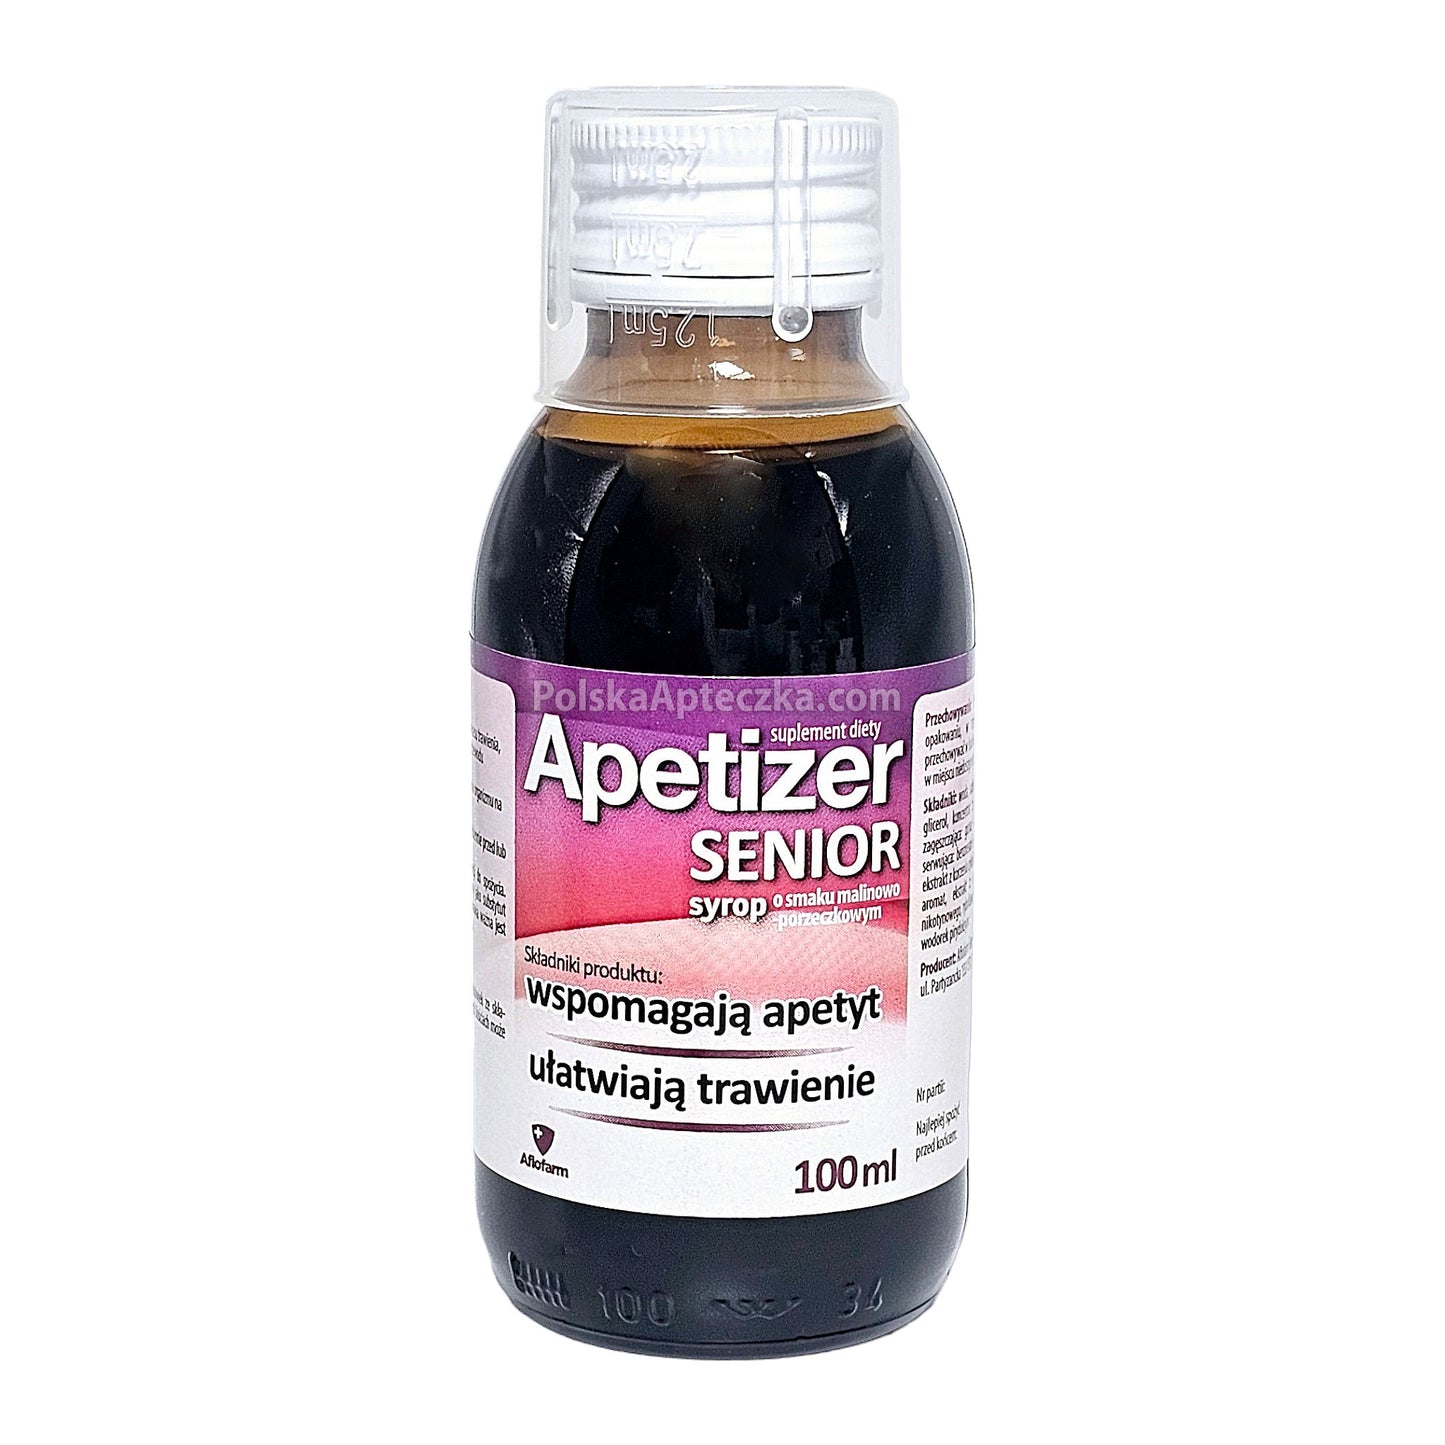 apetizer senior raspberry syrup